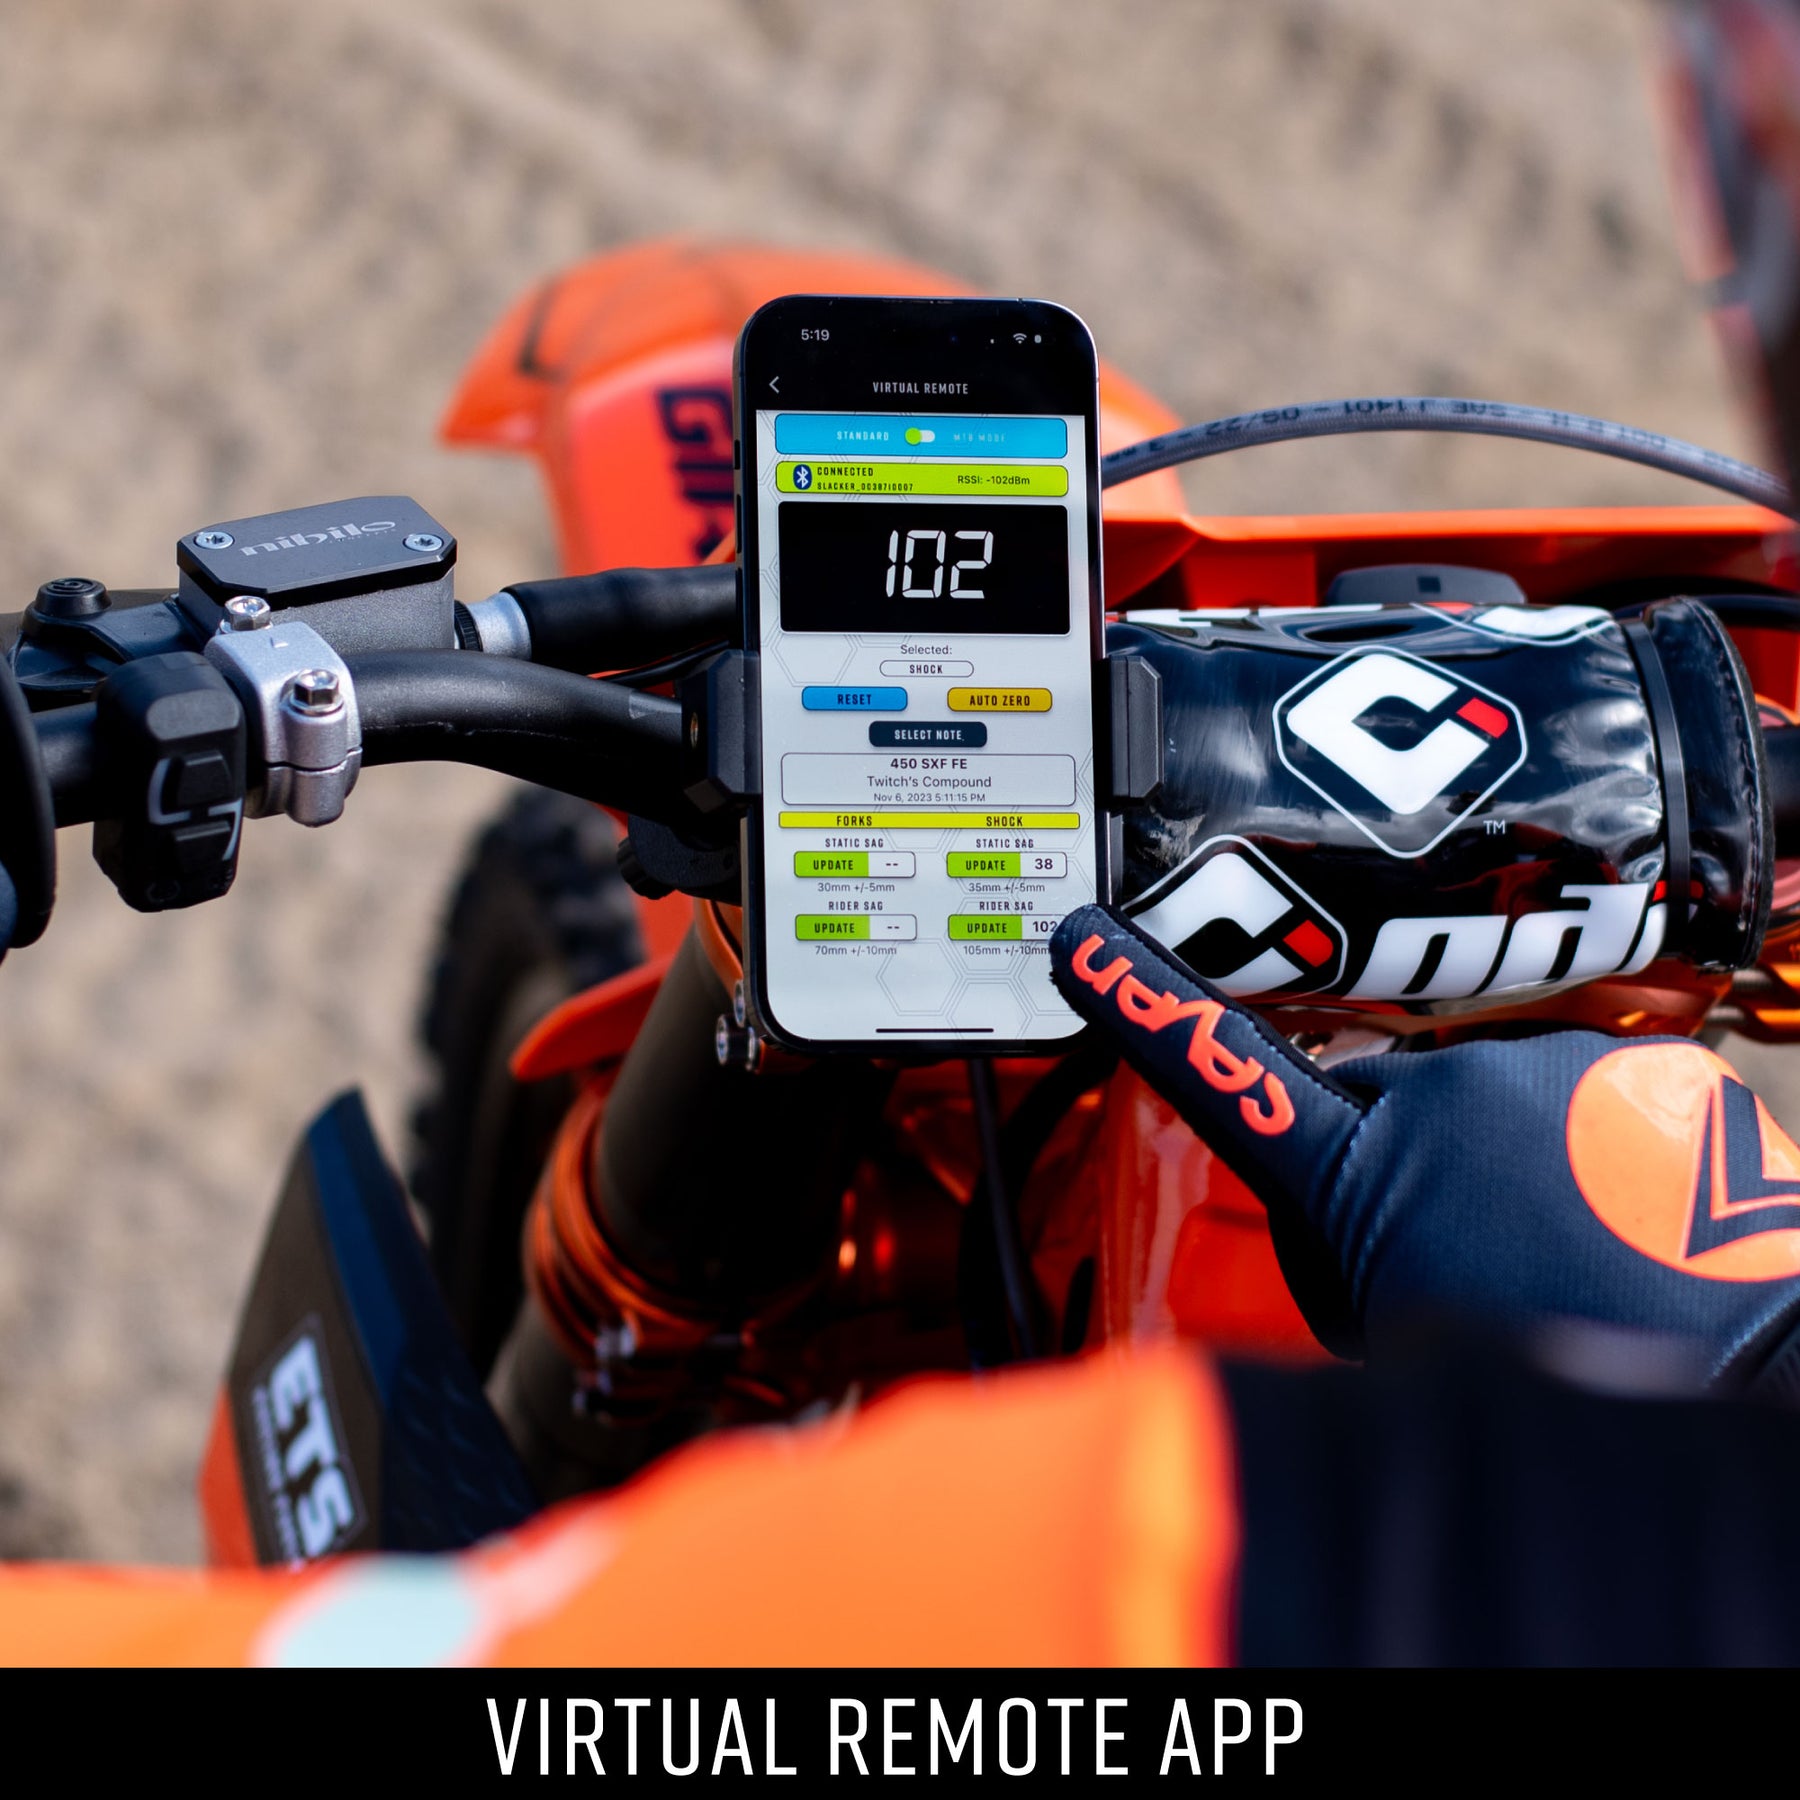 Slacker virtual remote app shows sag measurements right on the bars.